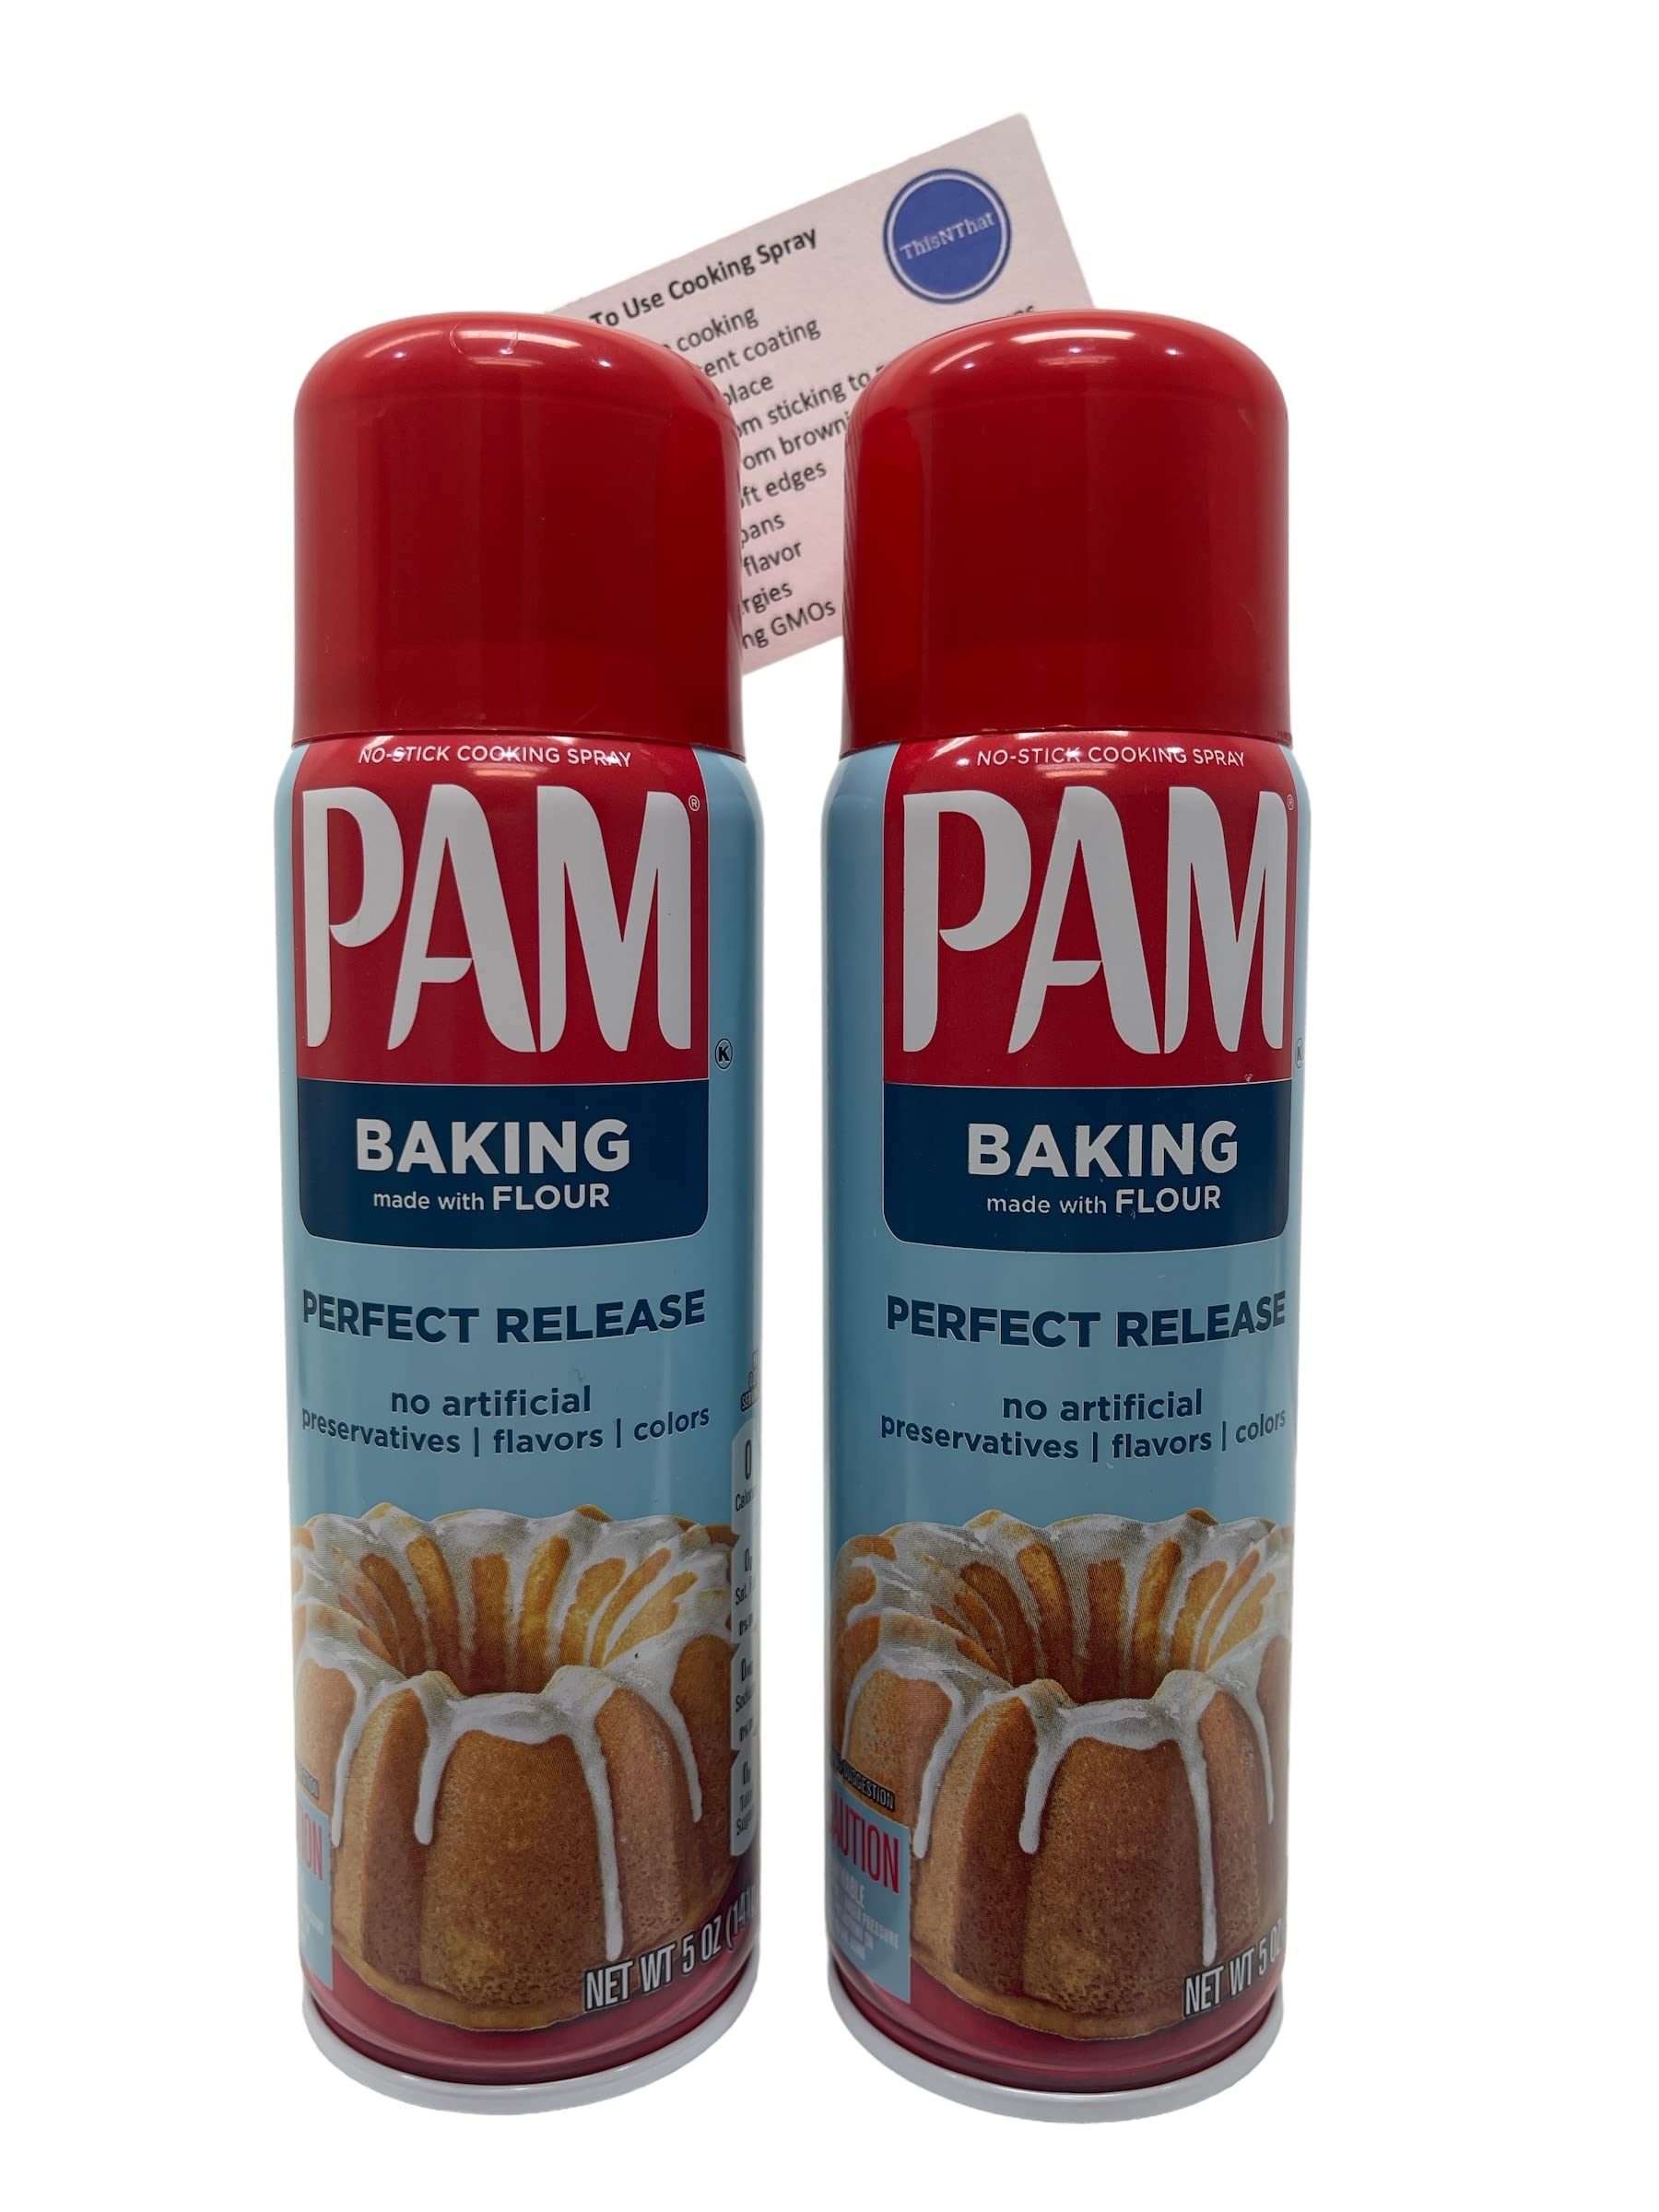 Pam Baking Spray Is Sprayable Flour That Saves My Bundts